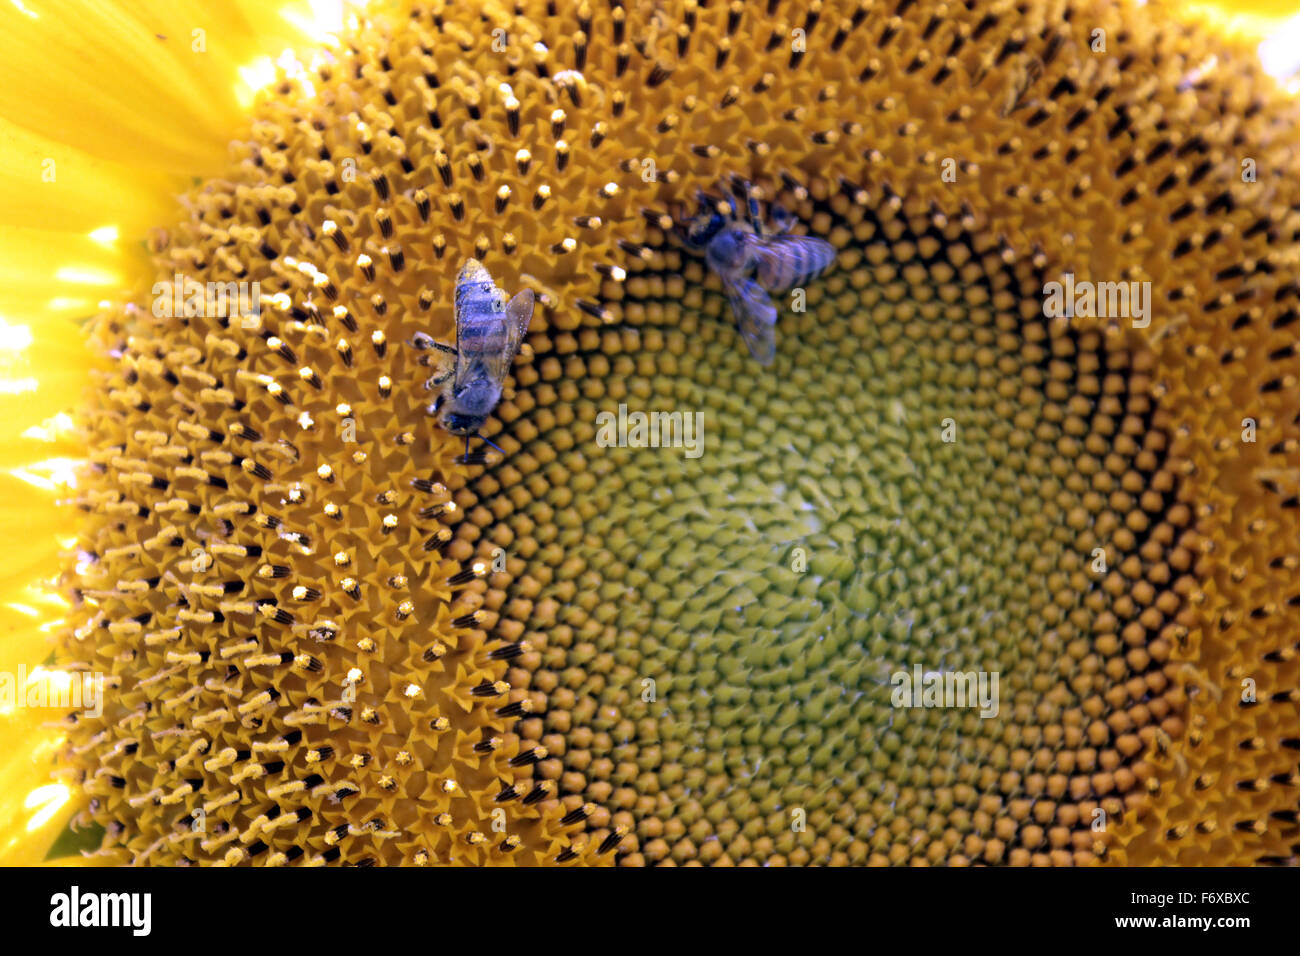 Honey bees feeding on nector on a sunflower garden Stock Photo